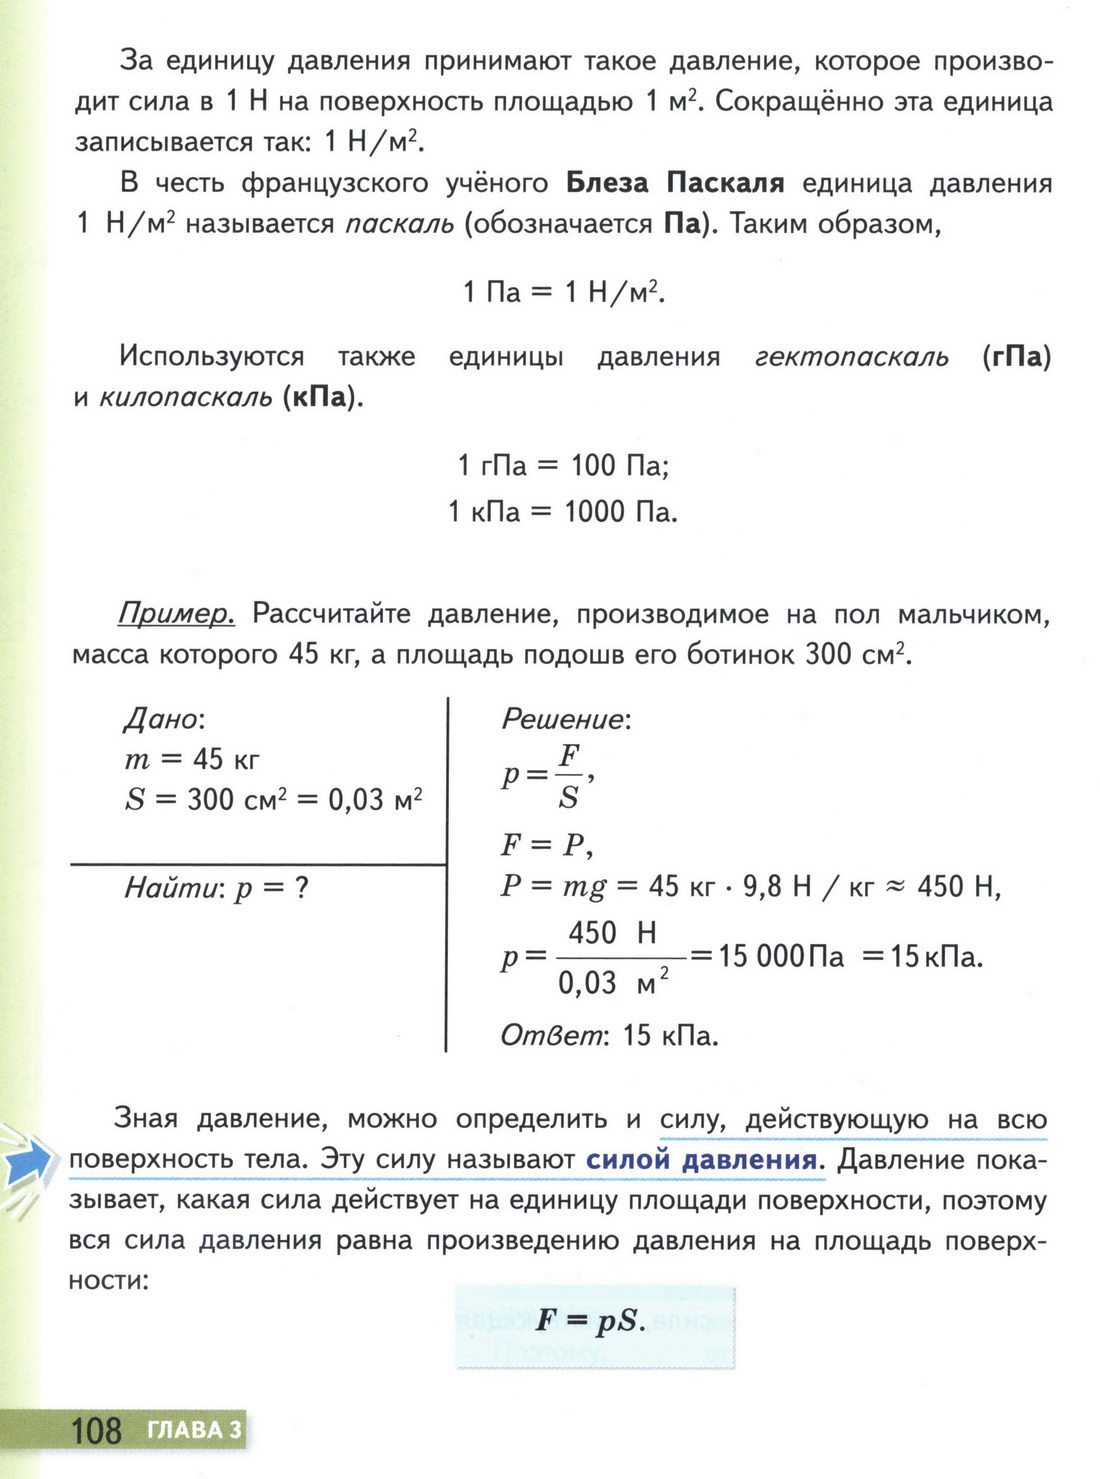 стр 108 учебник физики 7 класс параграф 35